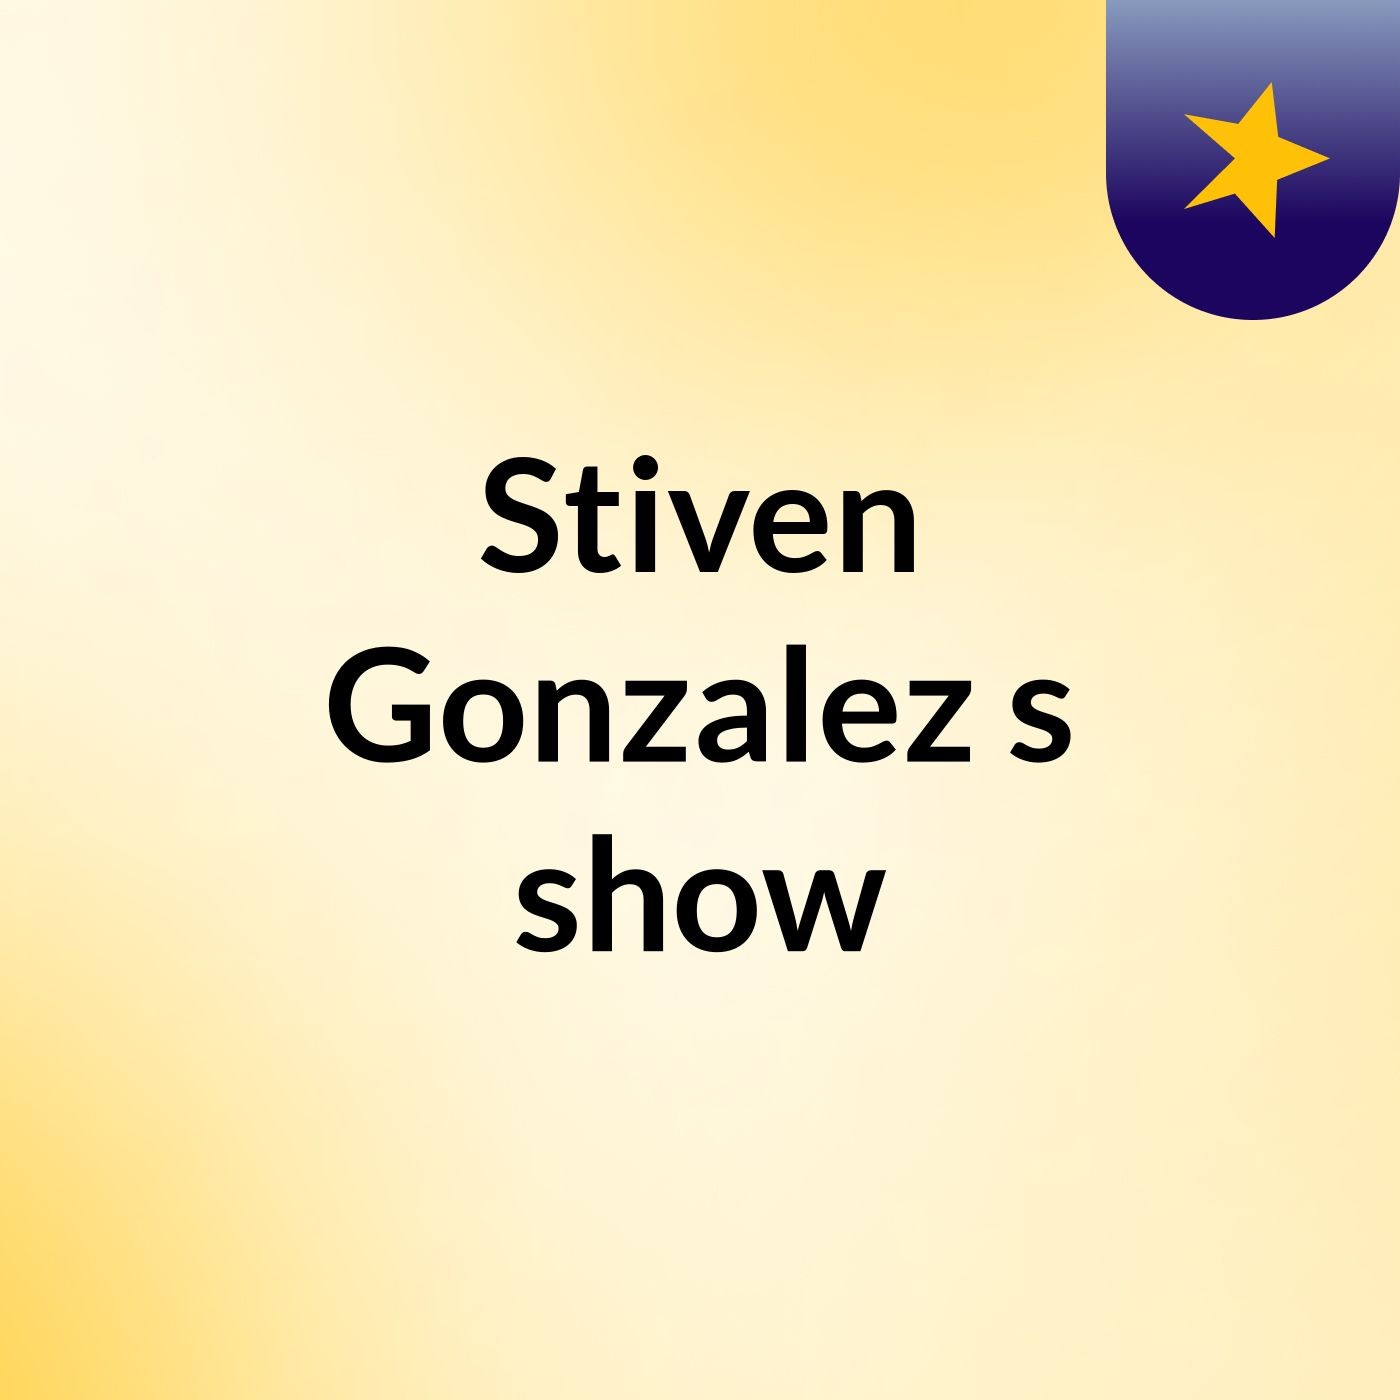 Stiven Gonzalez's show